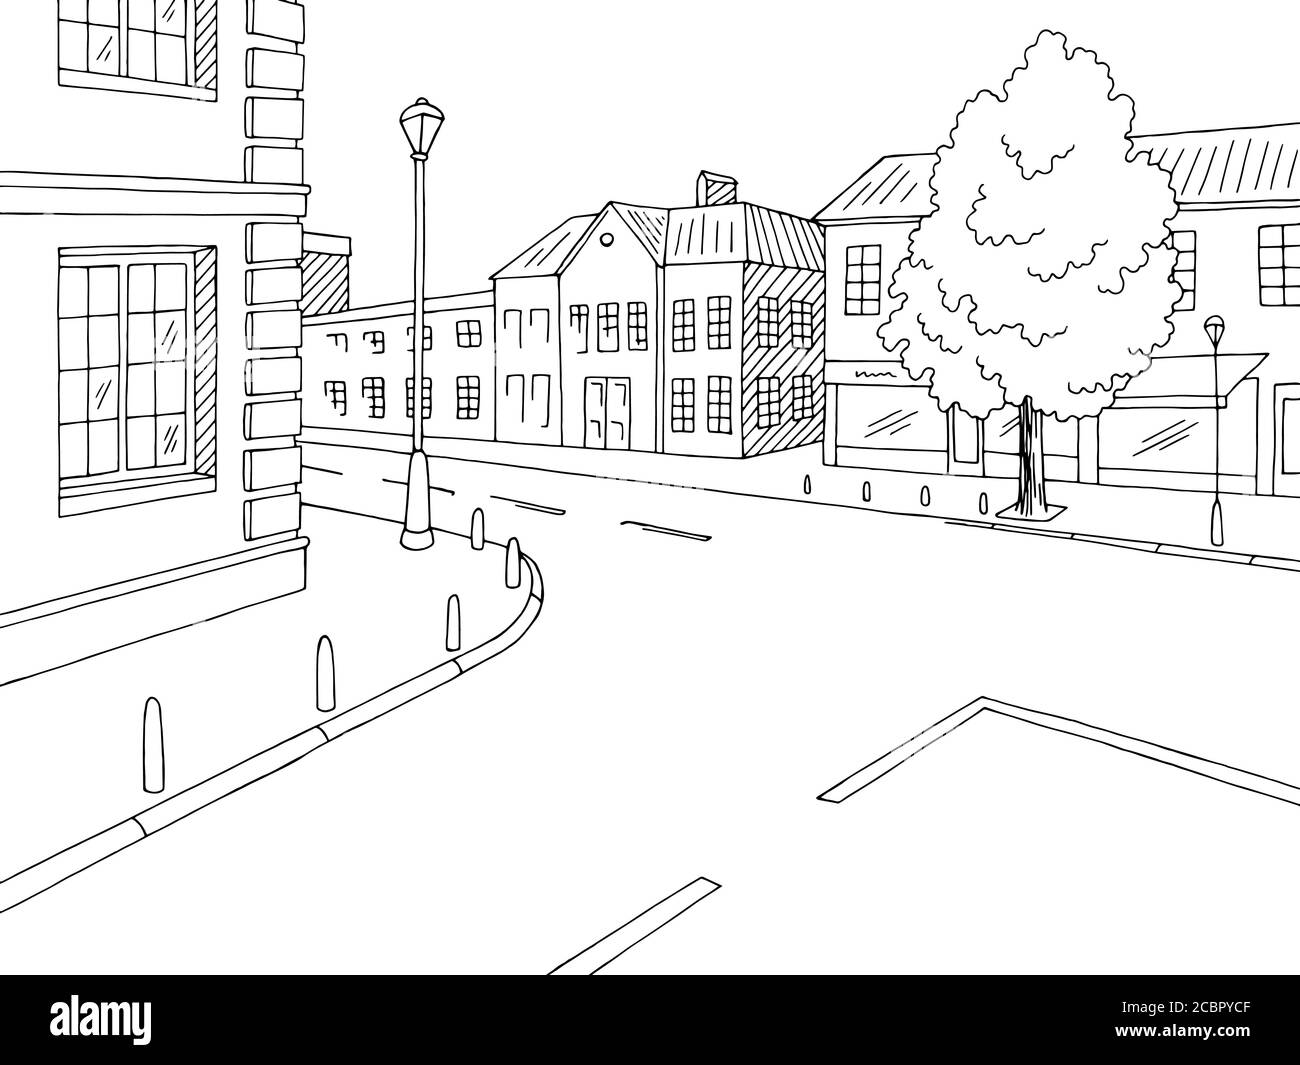 Straße Straße Grafik schwarz weiß Kreuzung Stadt Landschaft Skizze Illustration vektor Stock Vektor